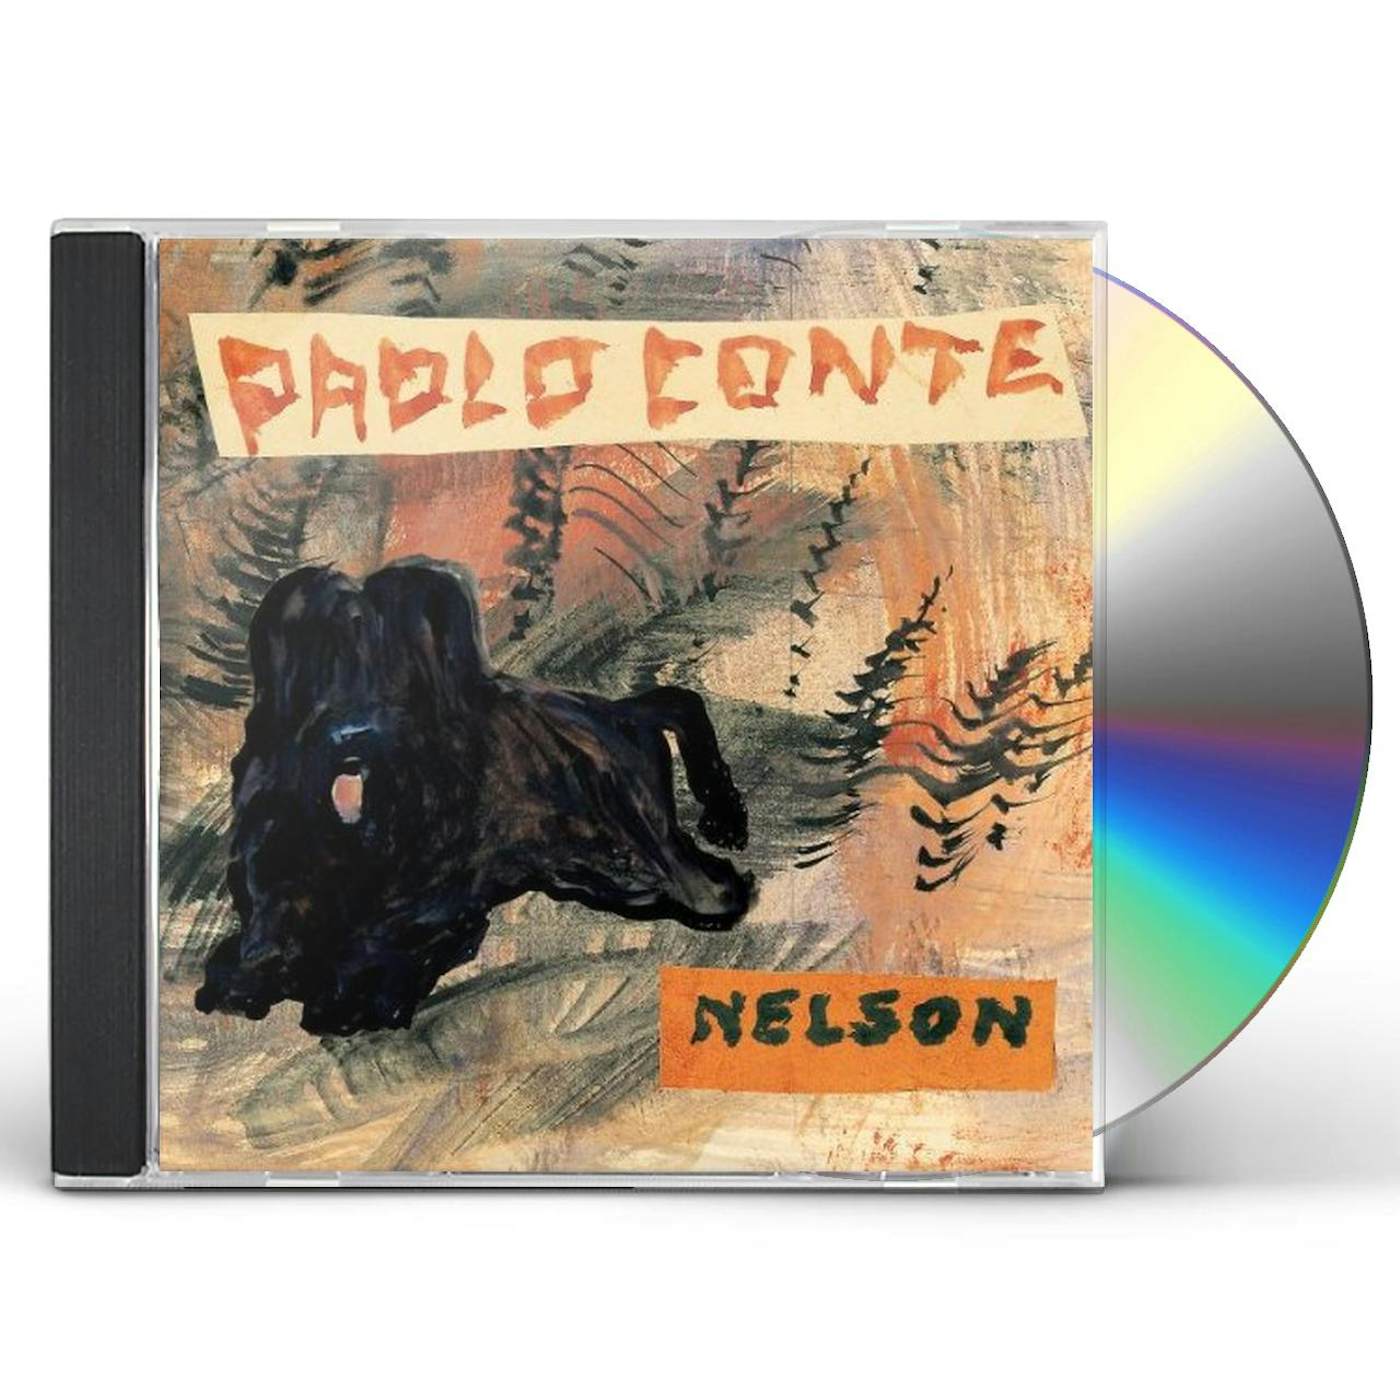 Paolo Conte NELSON CD